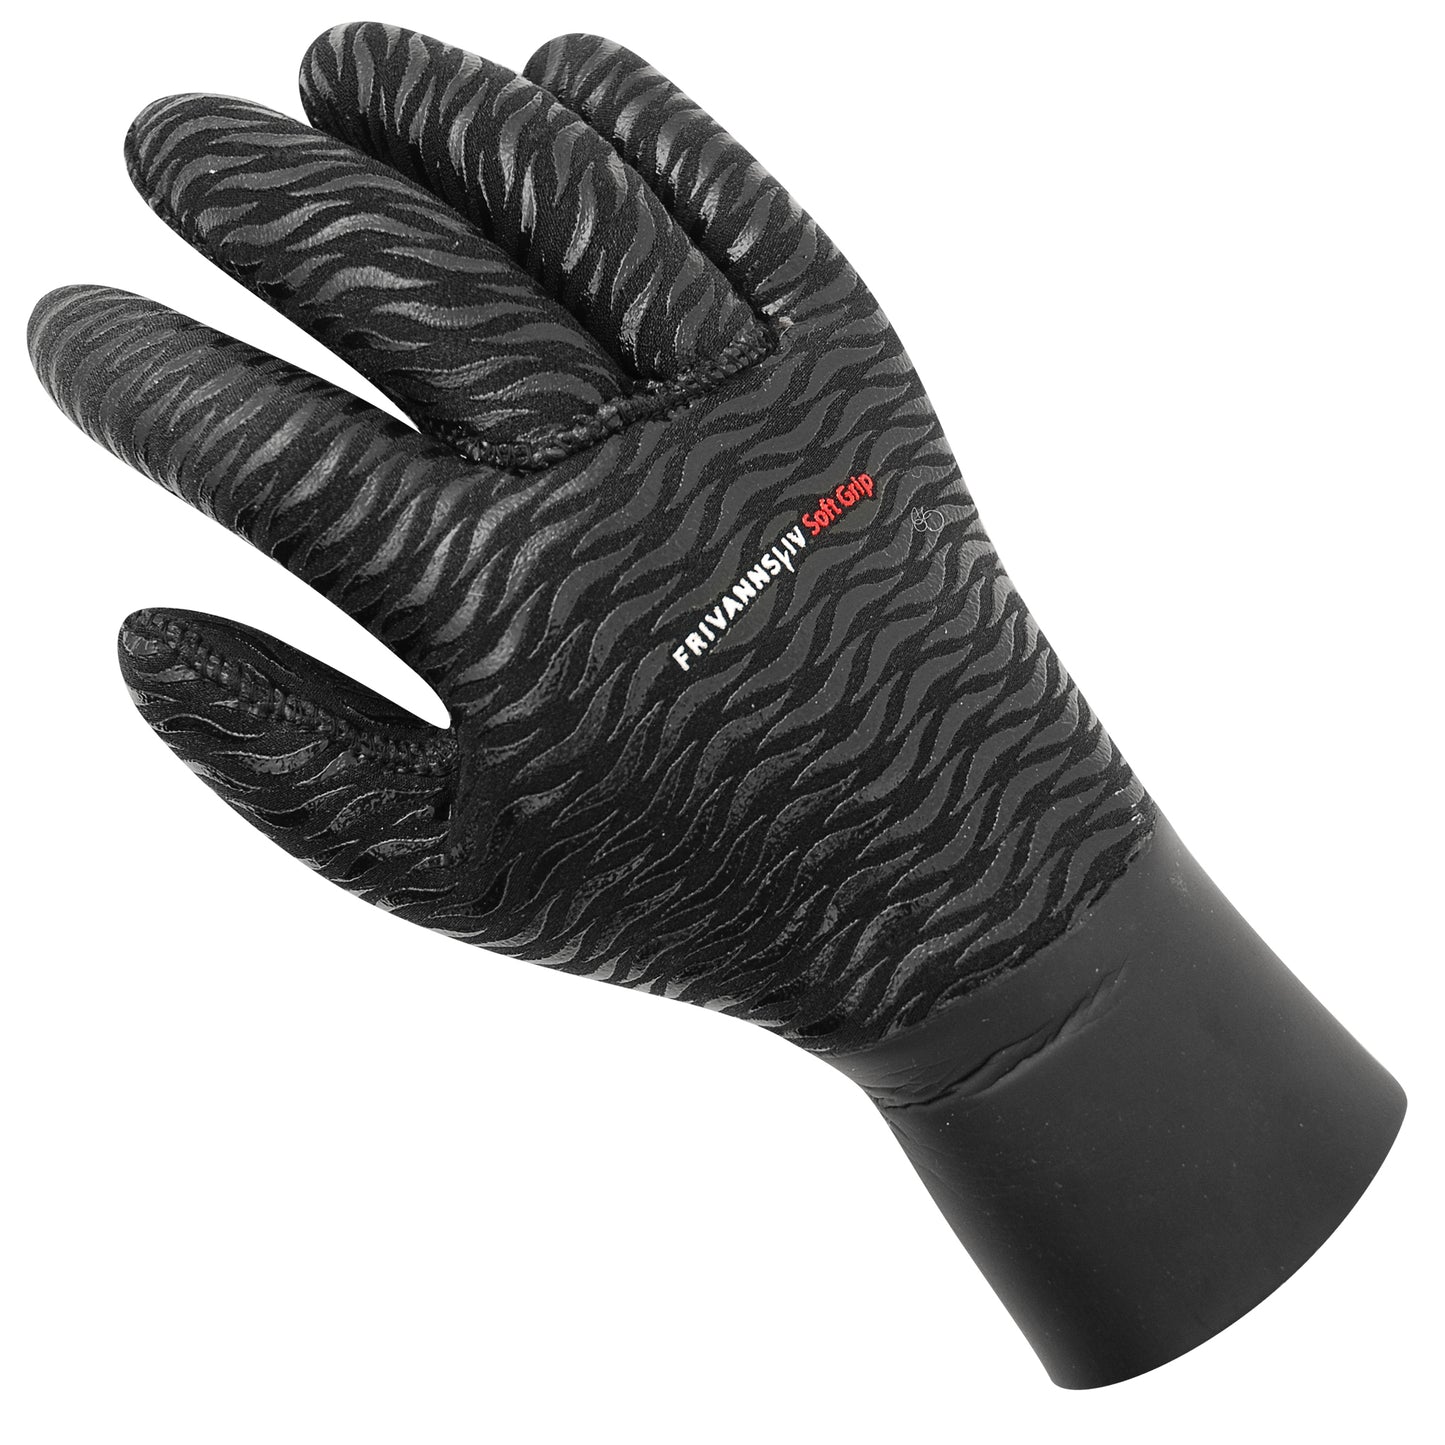 Frivannsliv® Soft Grip 5mm neoprene gloves